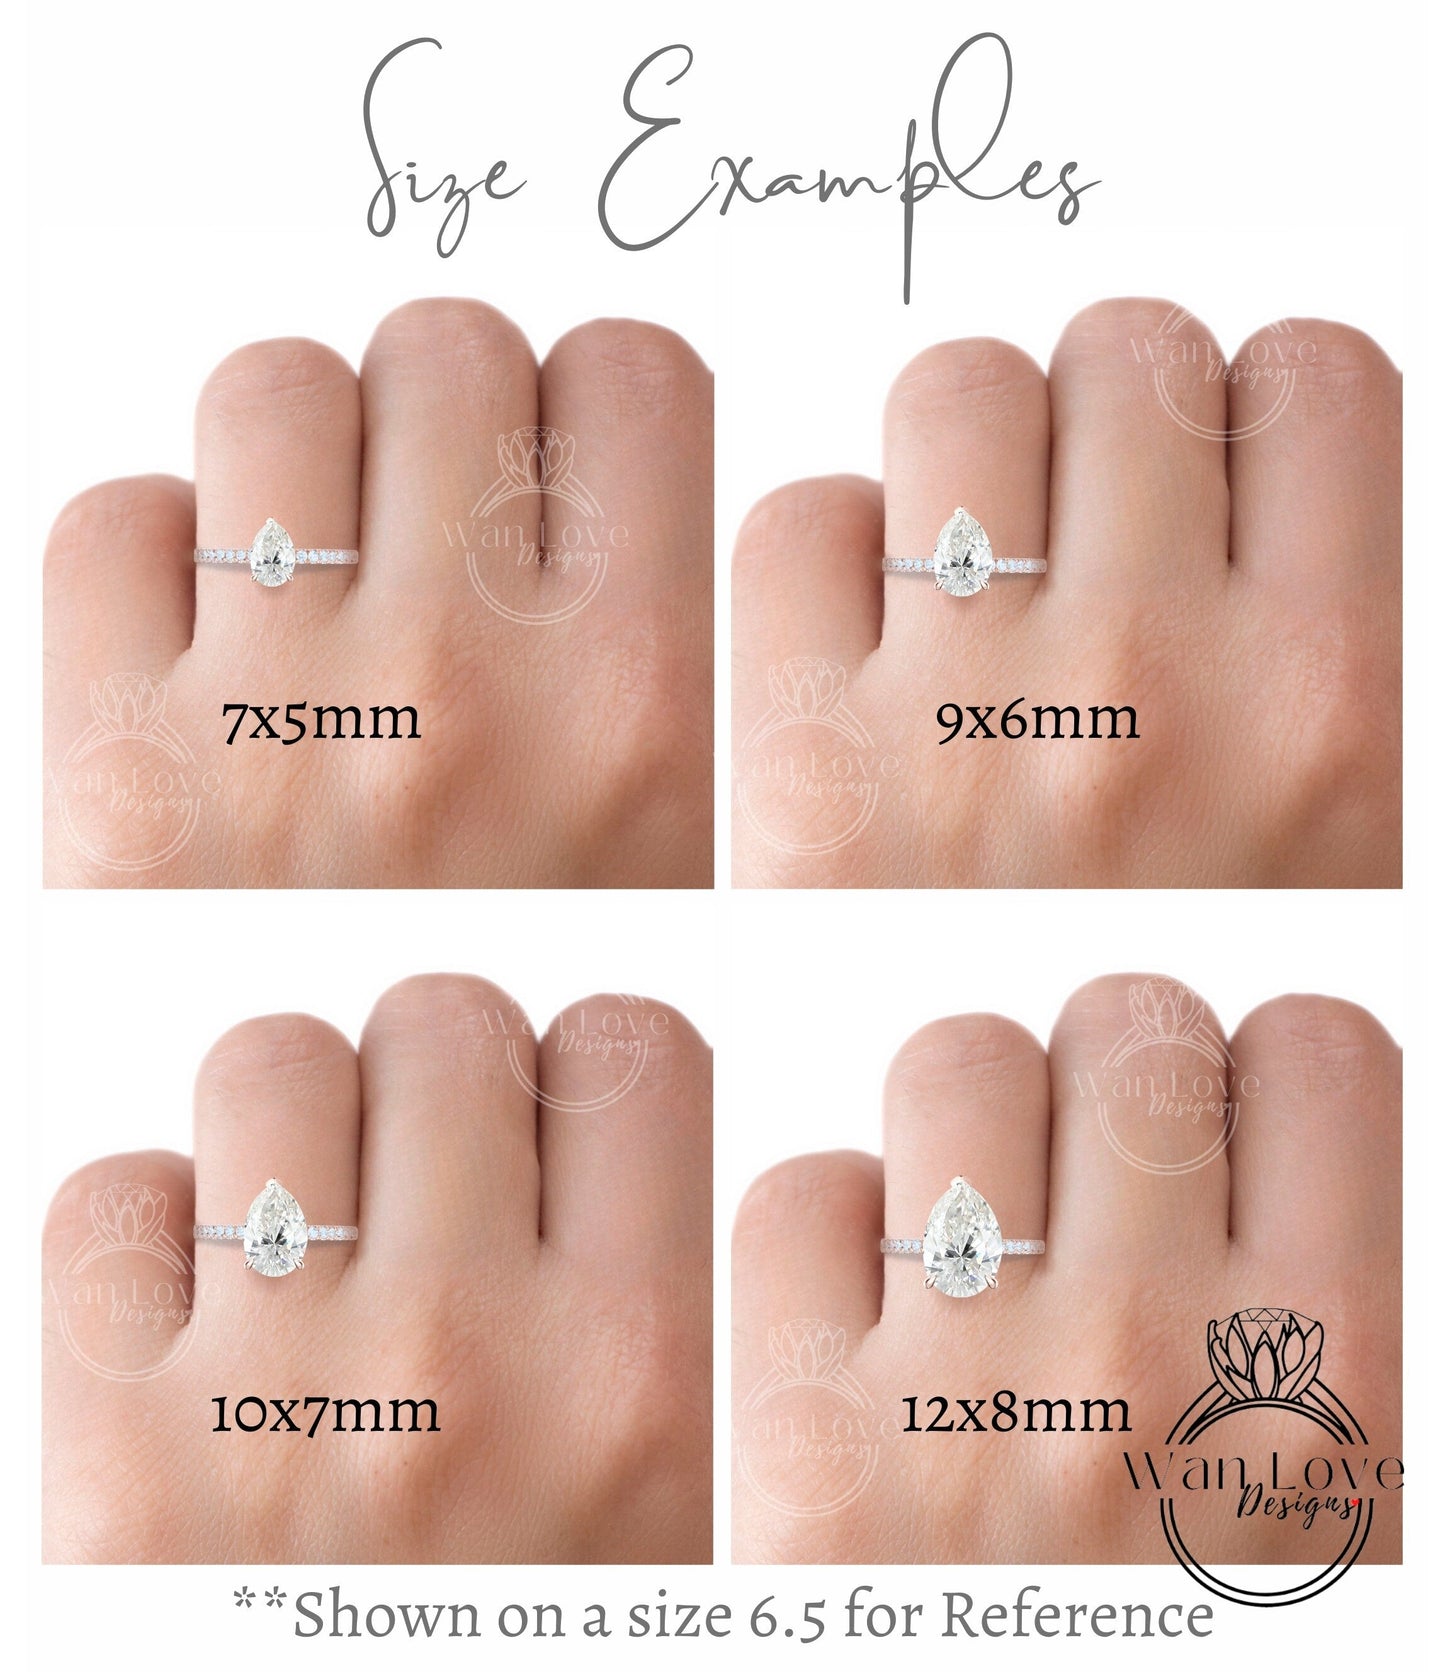 2ct Pear Moissanite Diamond Wedding Ring/Diamond side halo ring/Moissanite Engagement Ring/Stacking Ring/Promise ring/White gold ring Wan Love Designs